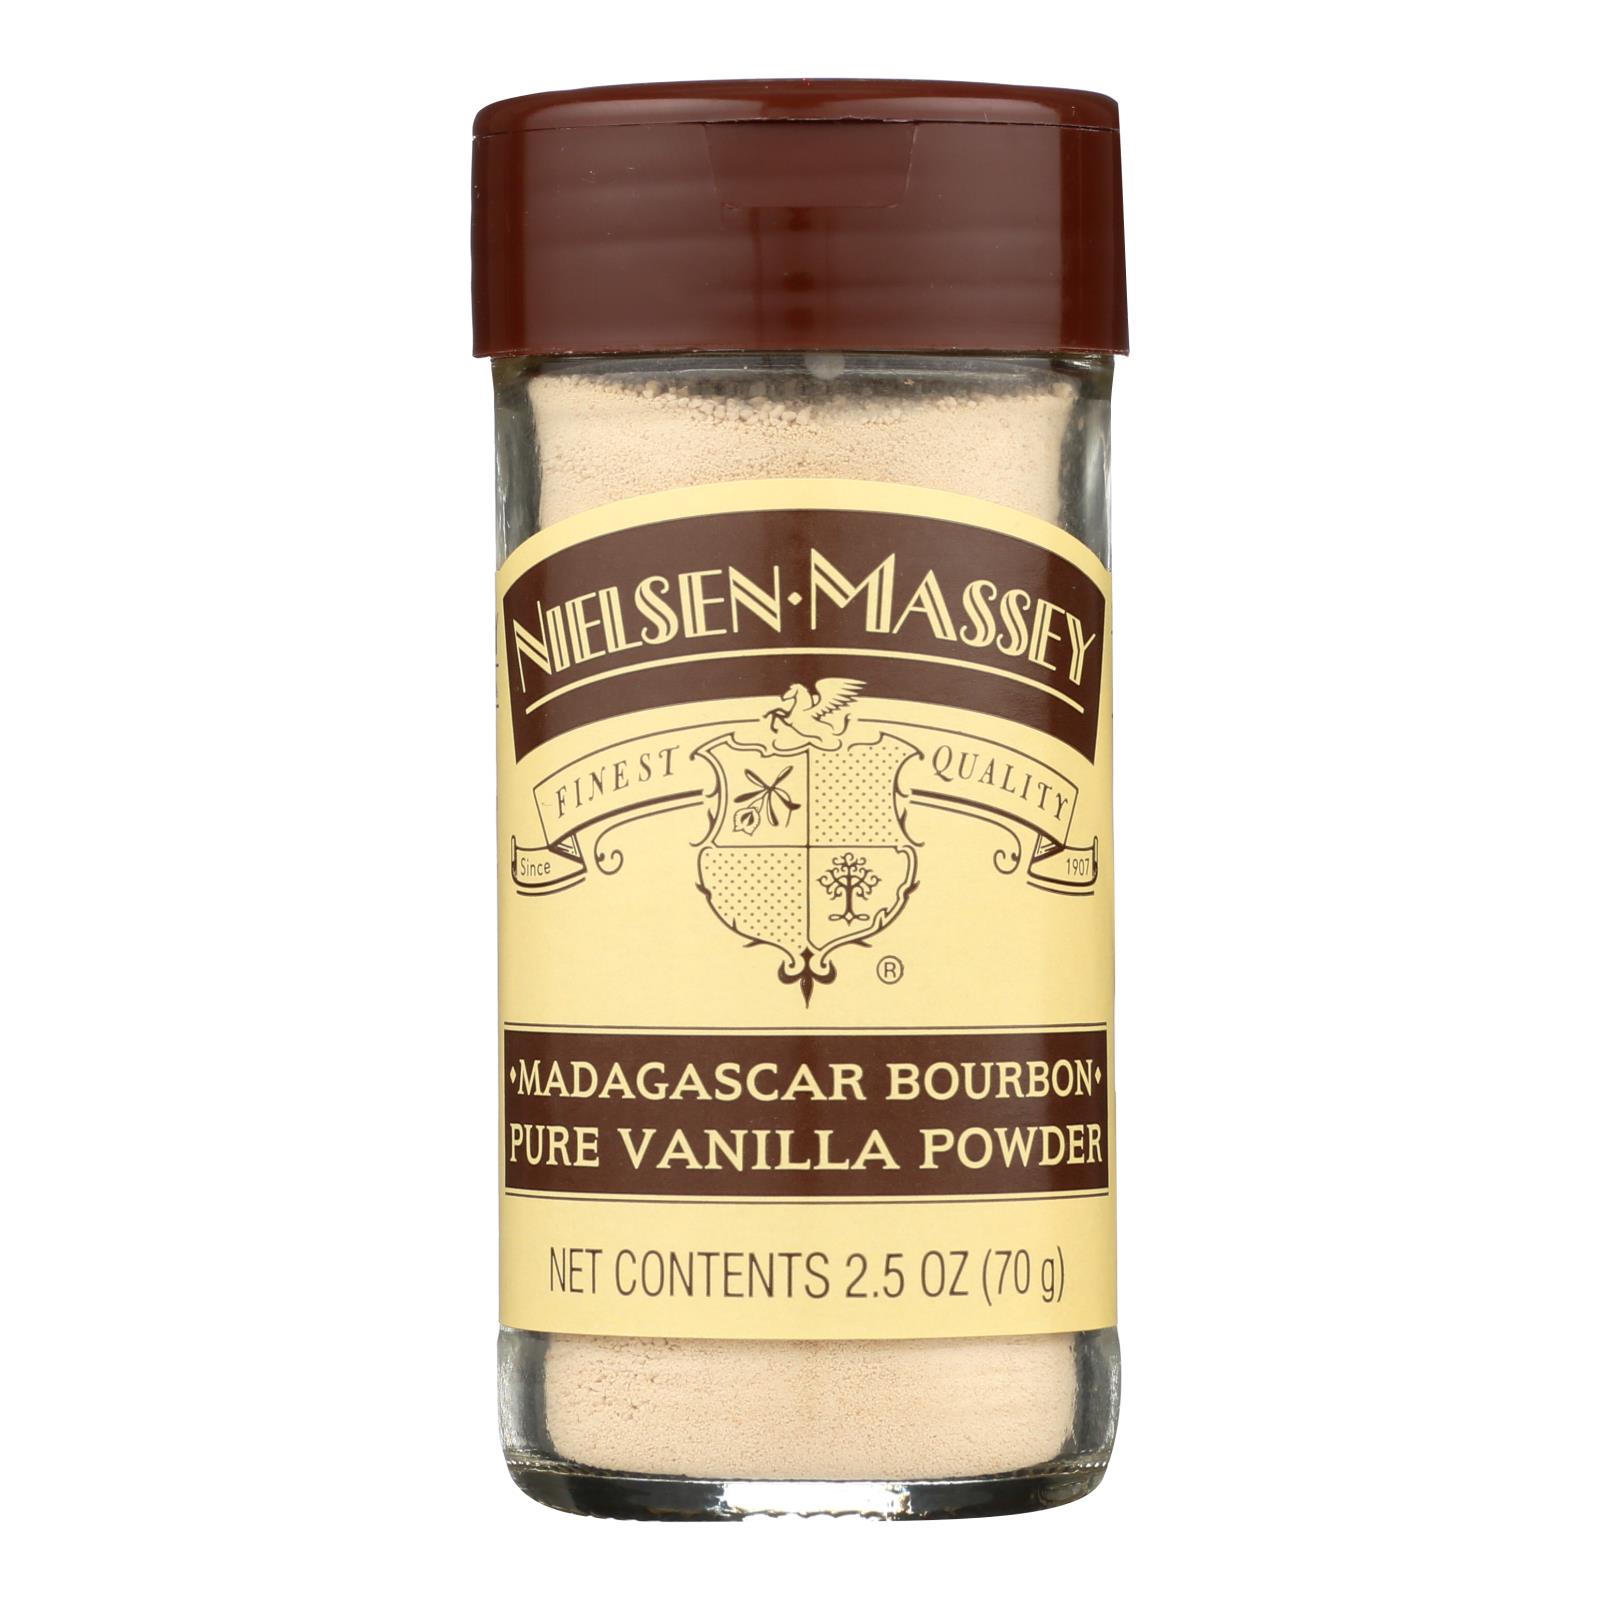 Nielsen-Massey Madagascar Bourbon Vanilla Powder - 6개 묶음상품 - 2.5 OZ